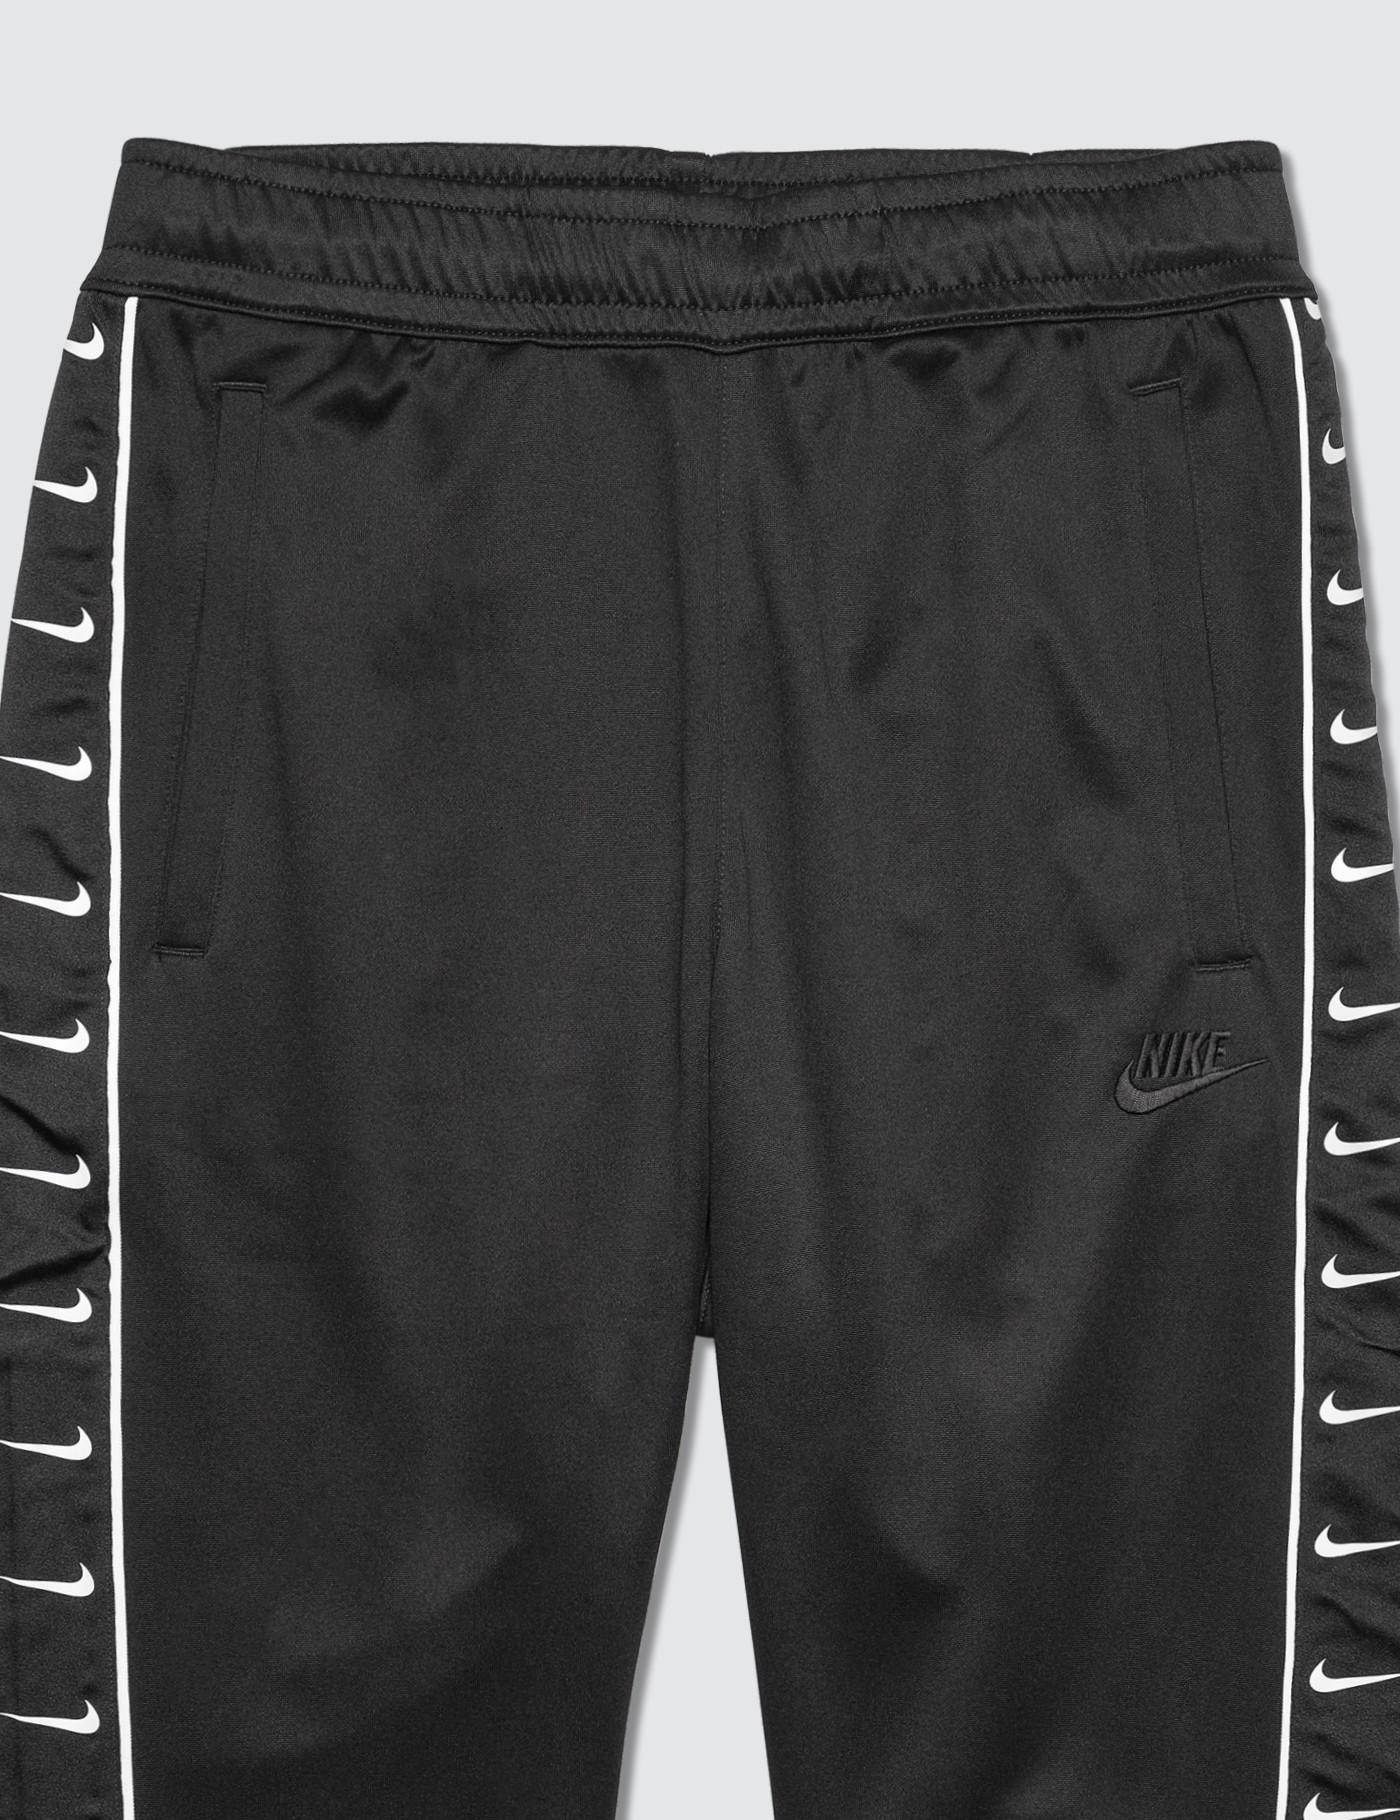 Nike Synthetic Side Swoosh Logo Track Pants in Black for Men - Lyst